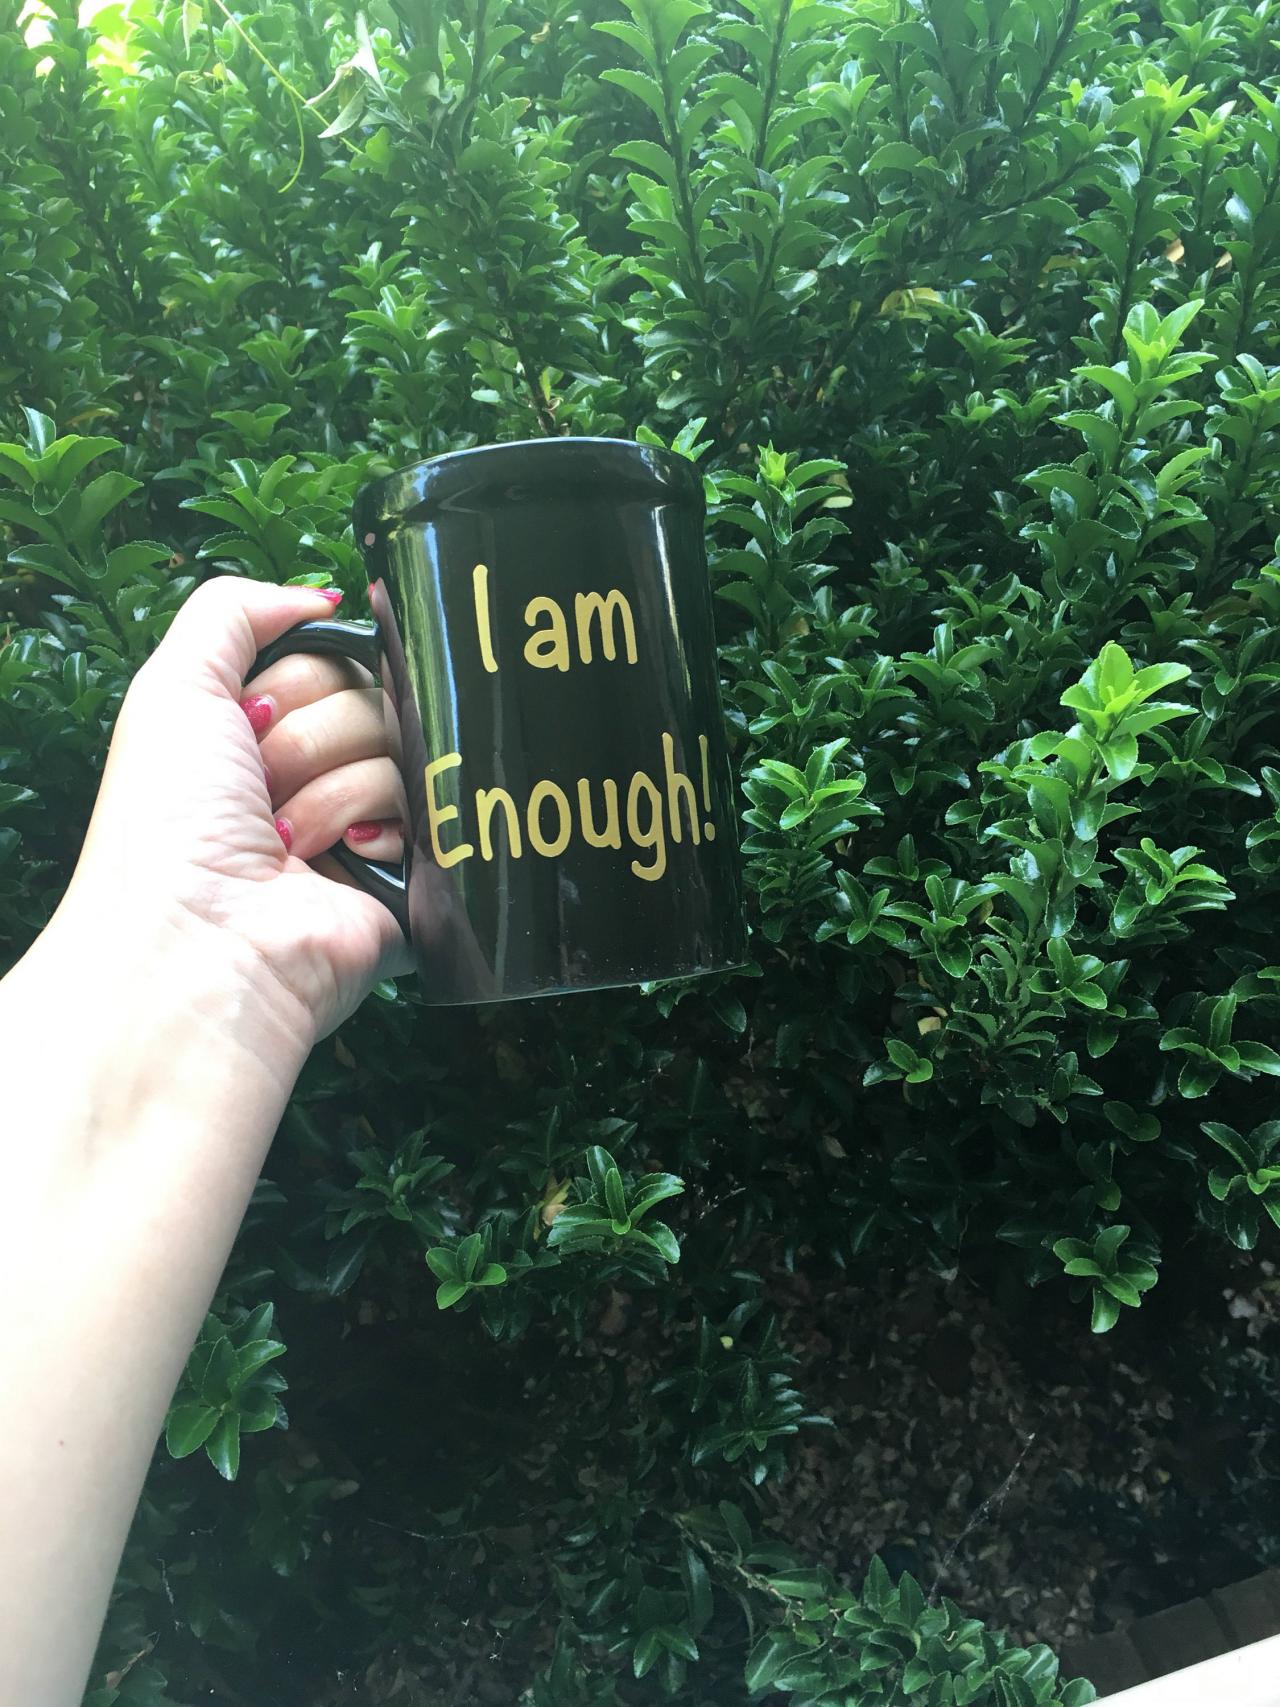 I Am Enough! Coffee/tea Mug